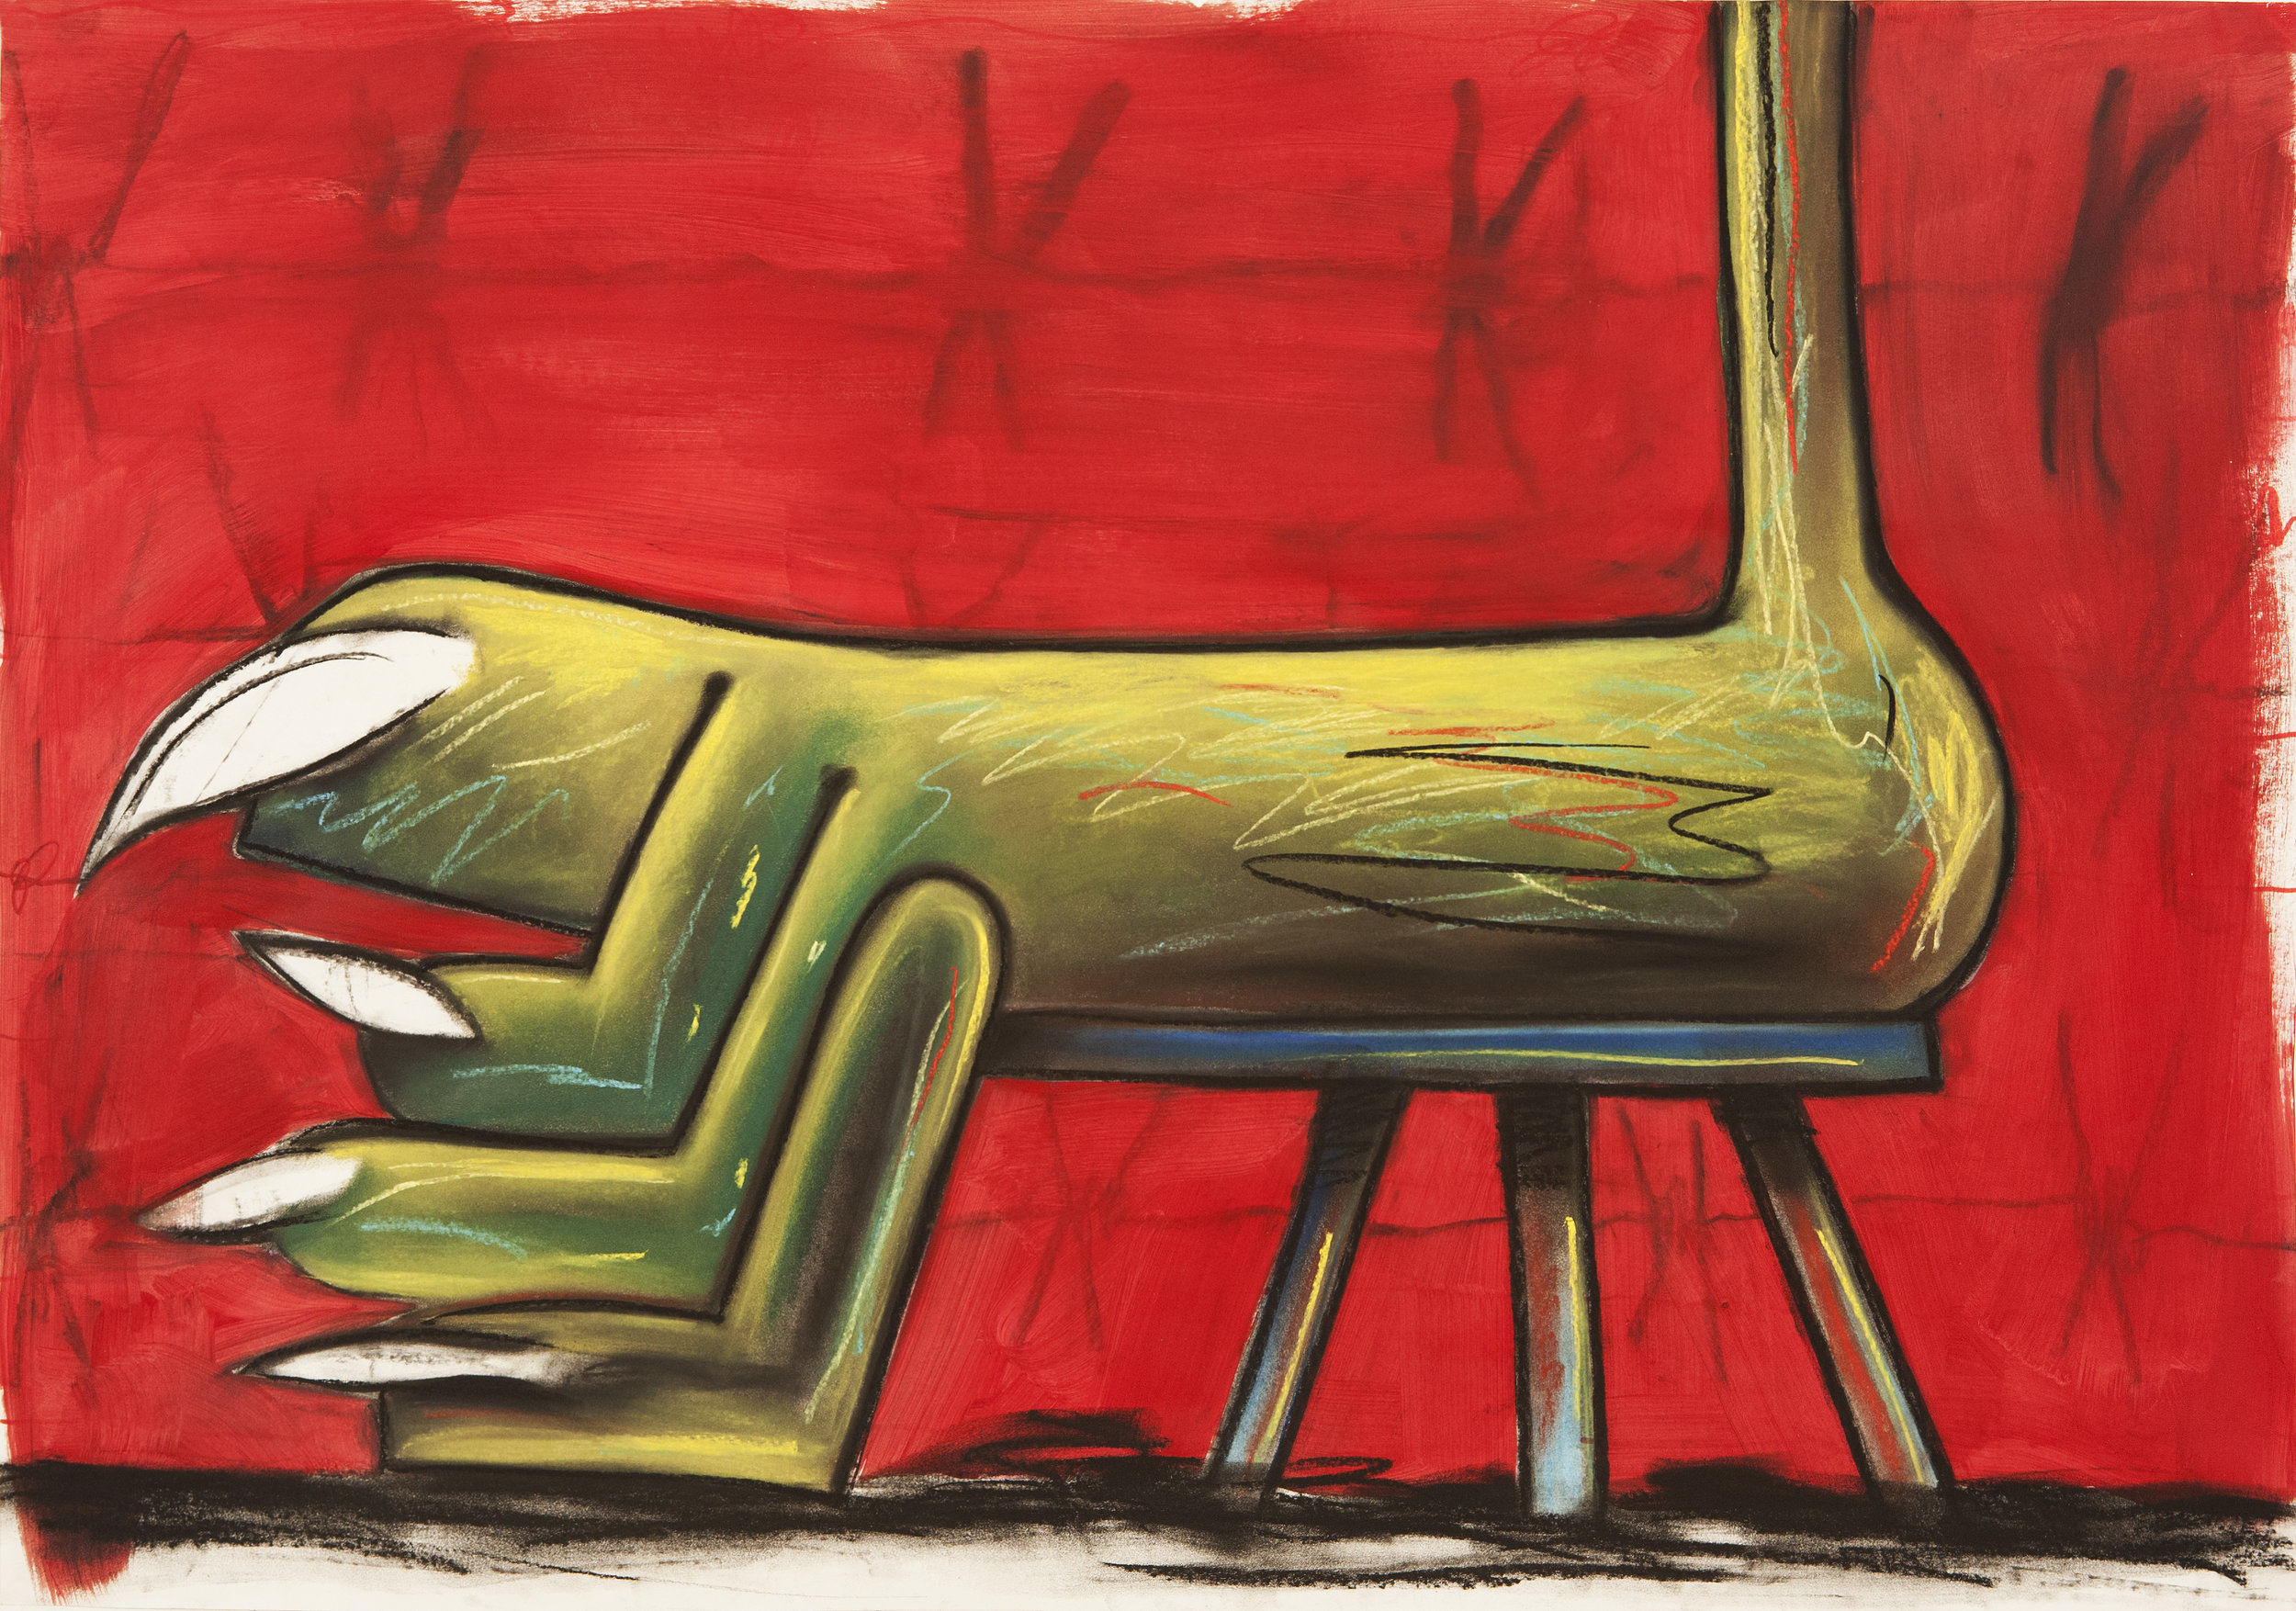  Sick Feet Taburete, 2015 Pastel, Charcoal and Acrylic on Paper. 59,5x84cm 